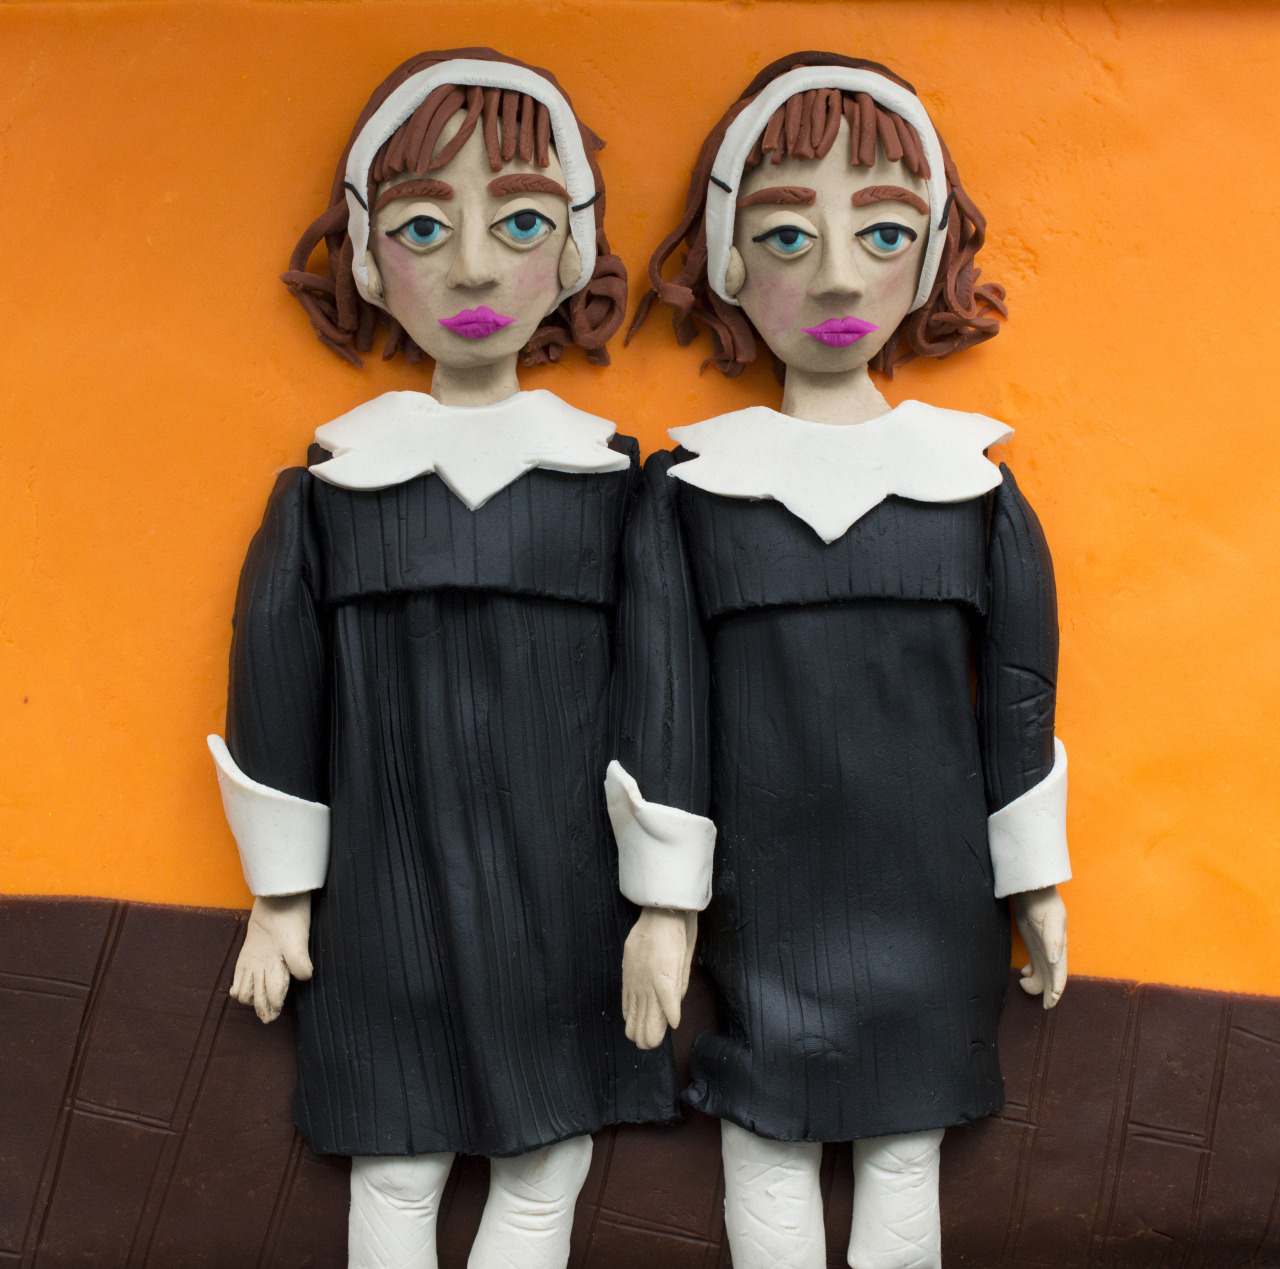 Original photograph: Identical Twins, Roselle, N.J., 1967 by Diane Arbus